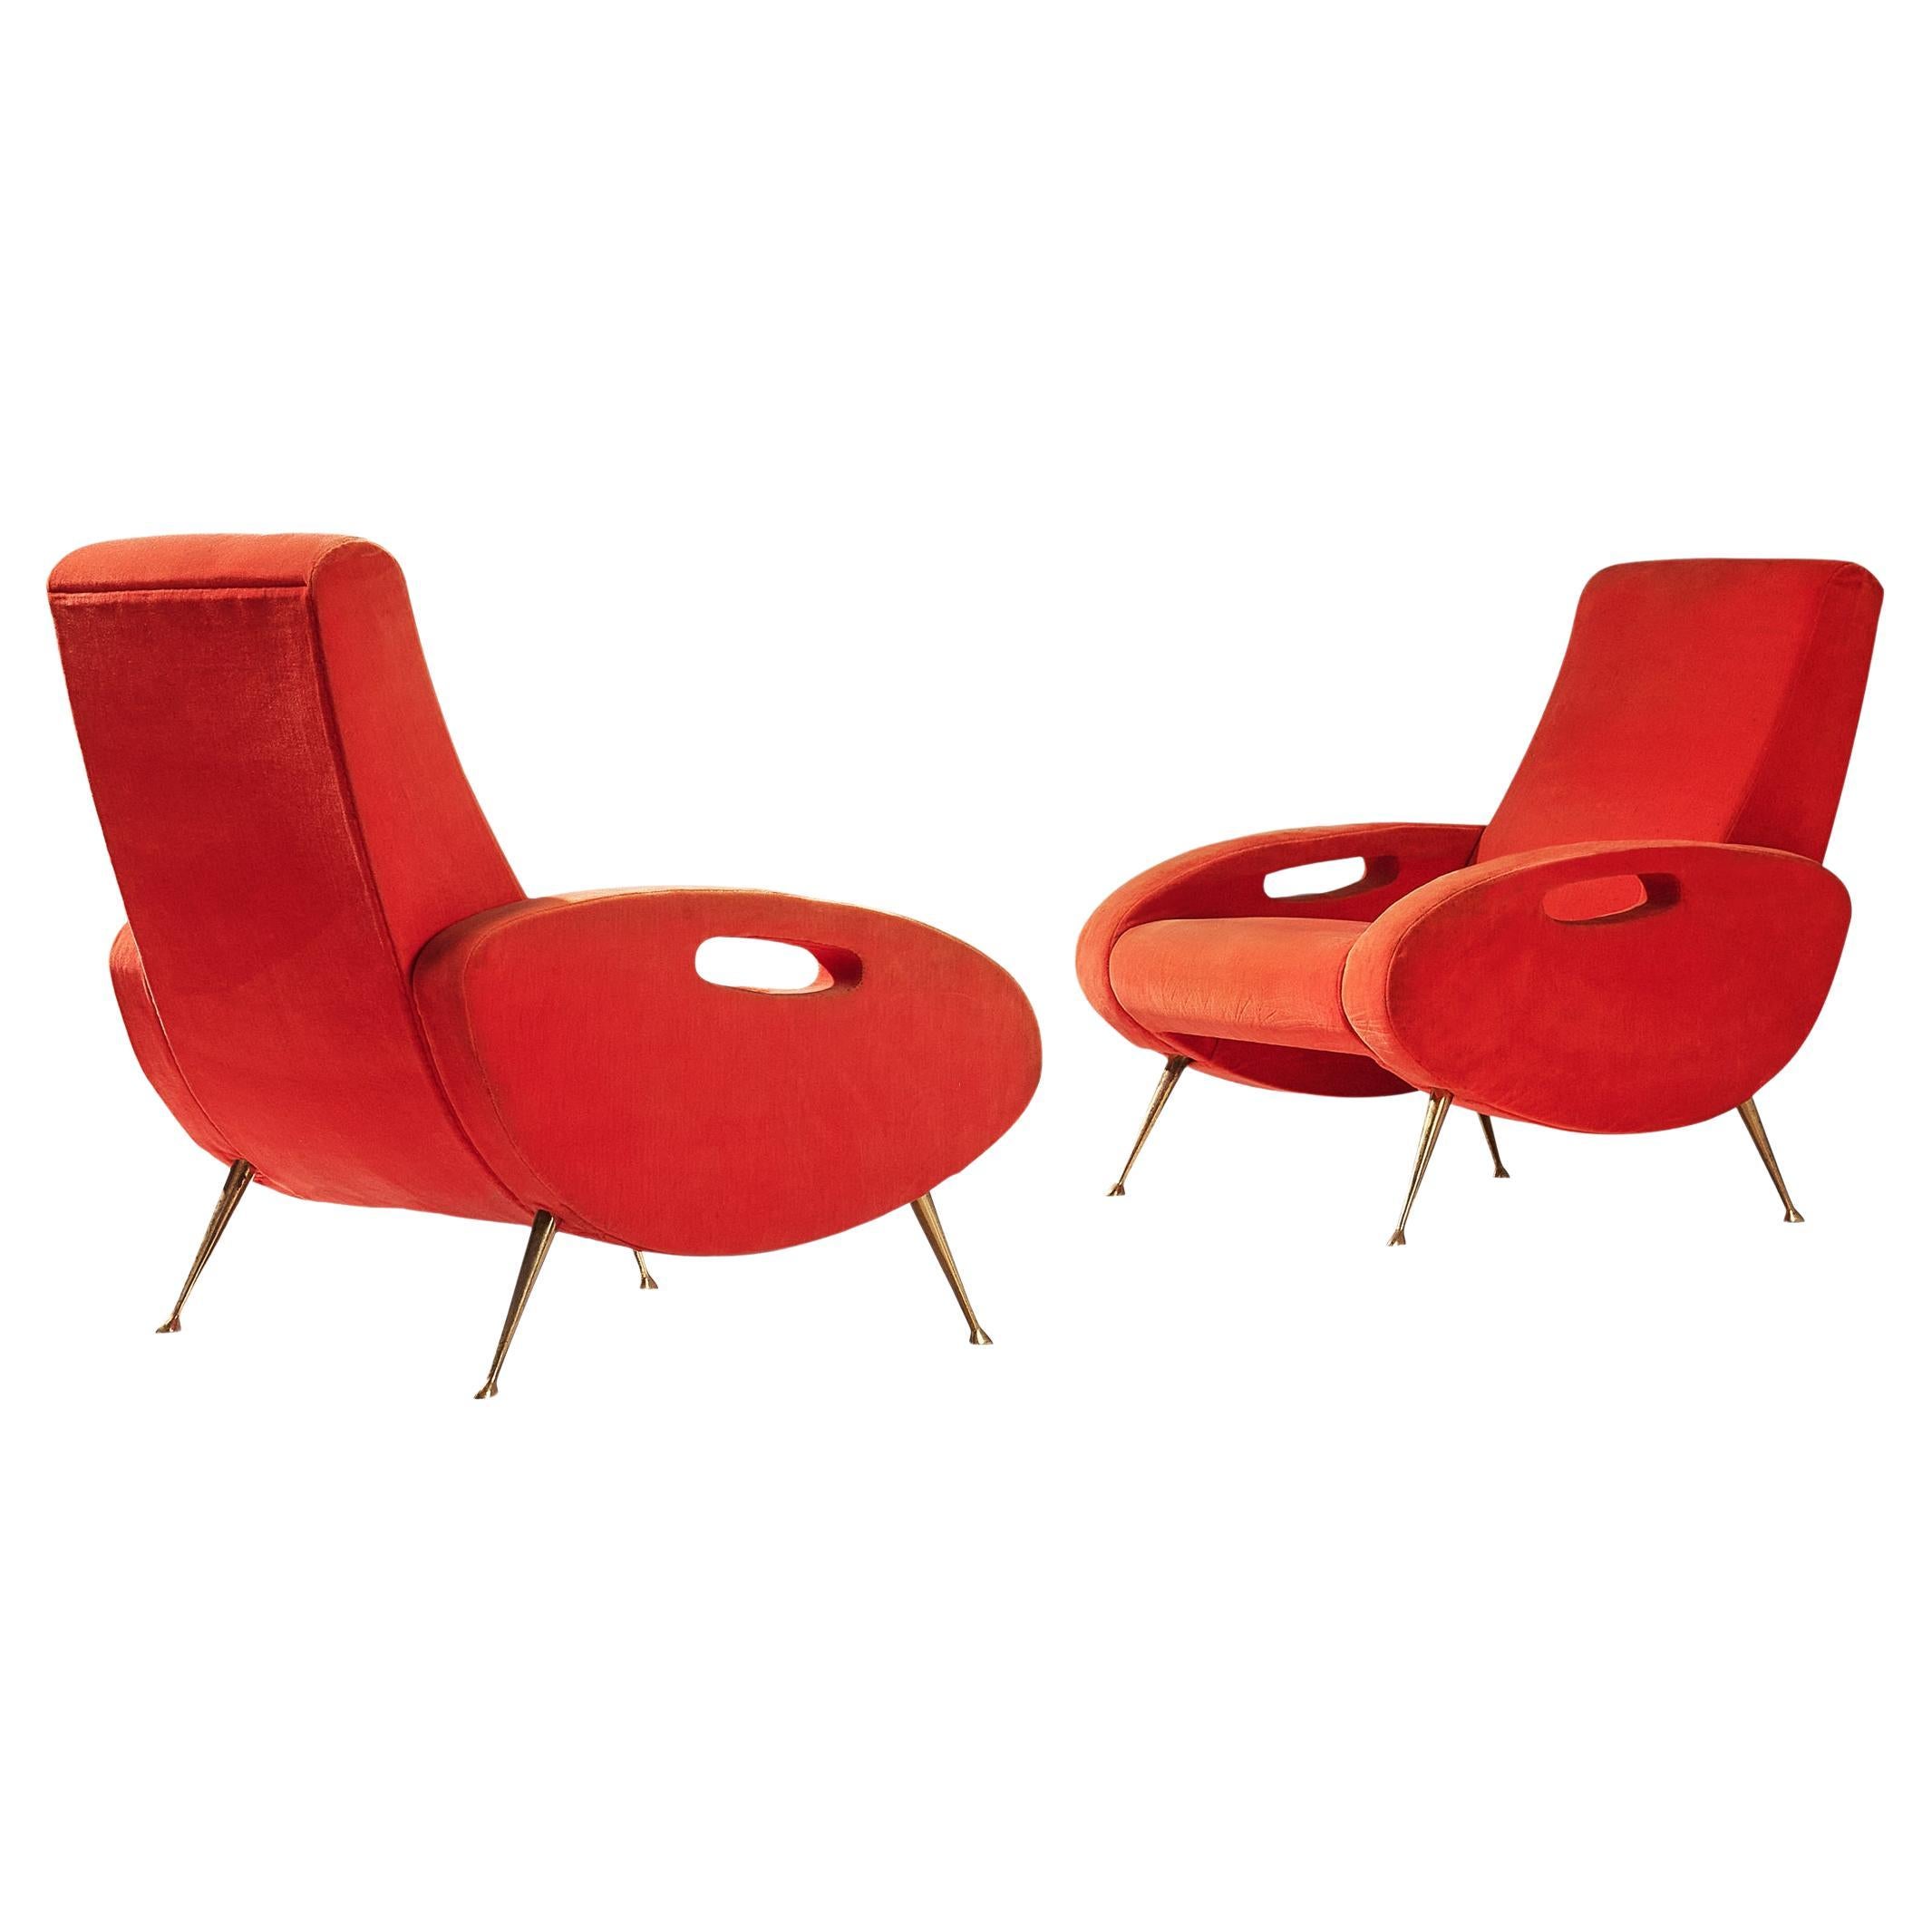 François Letourneur Pair of Lounge Chairs in Red Velvet Upholstery 